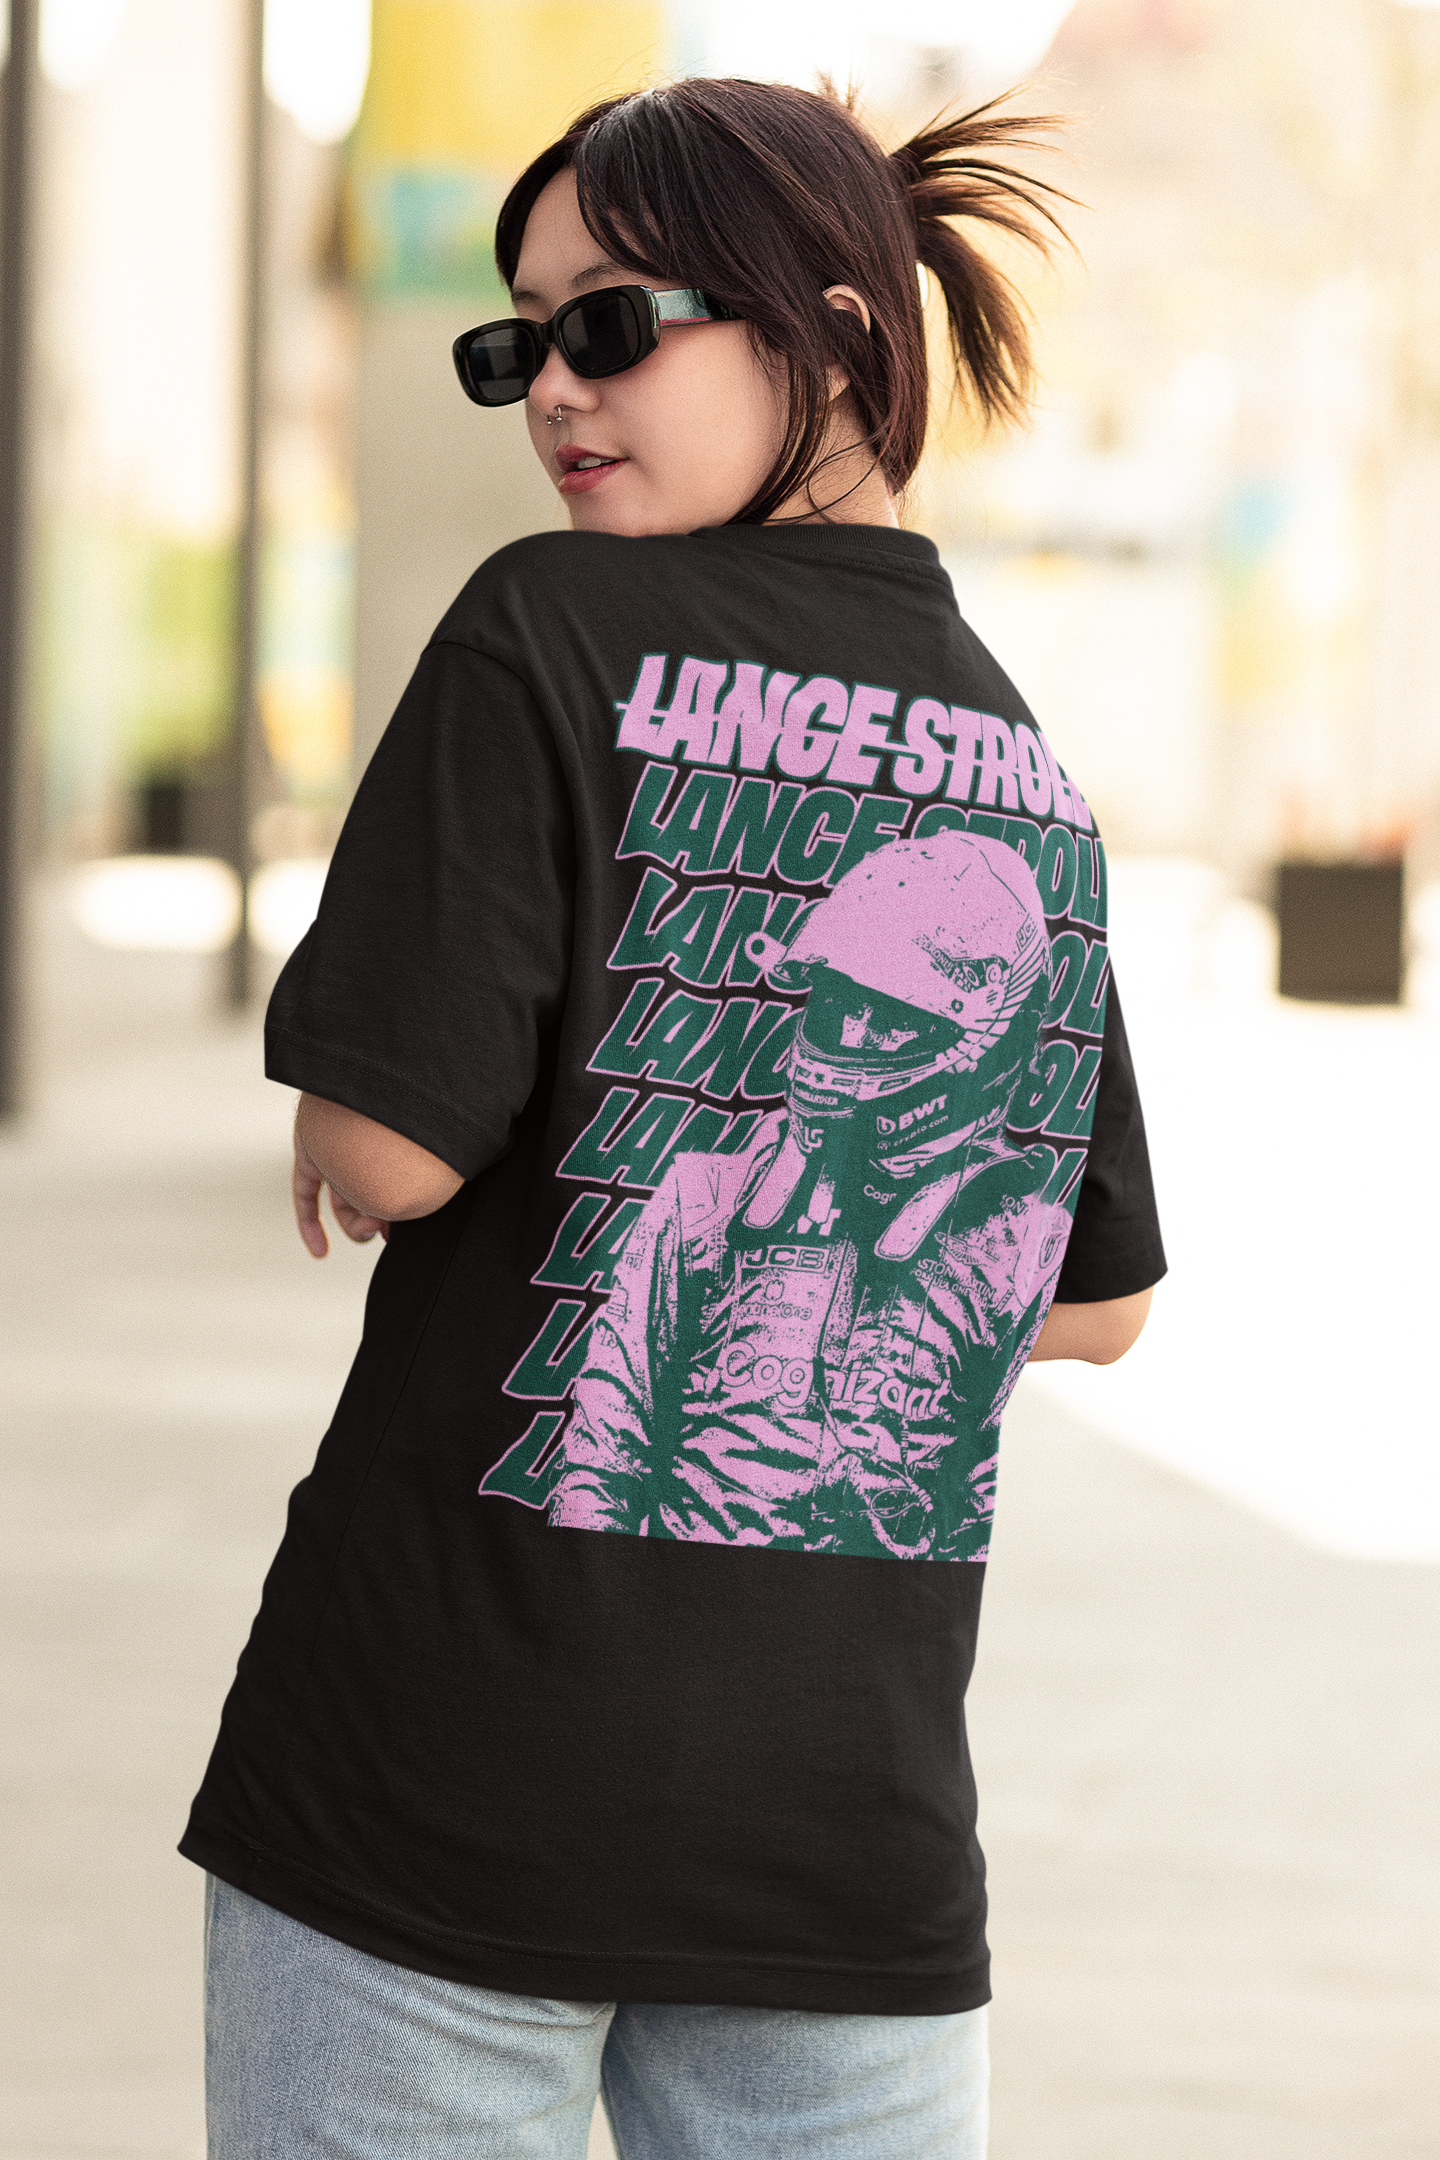 Lance Stroll oversized T-Shirt WOMEN